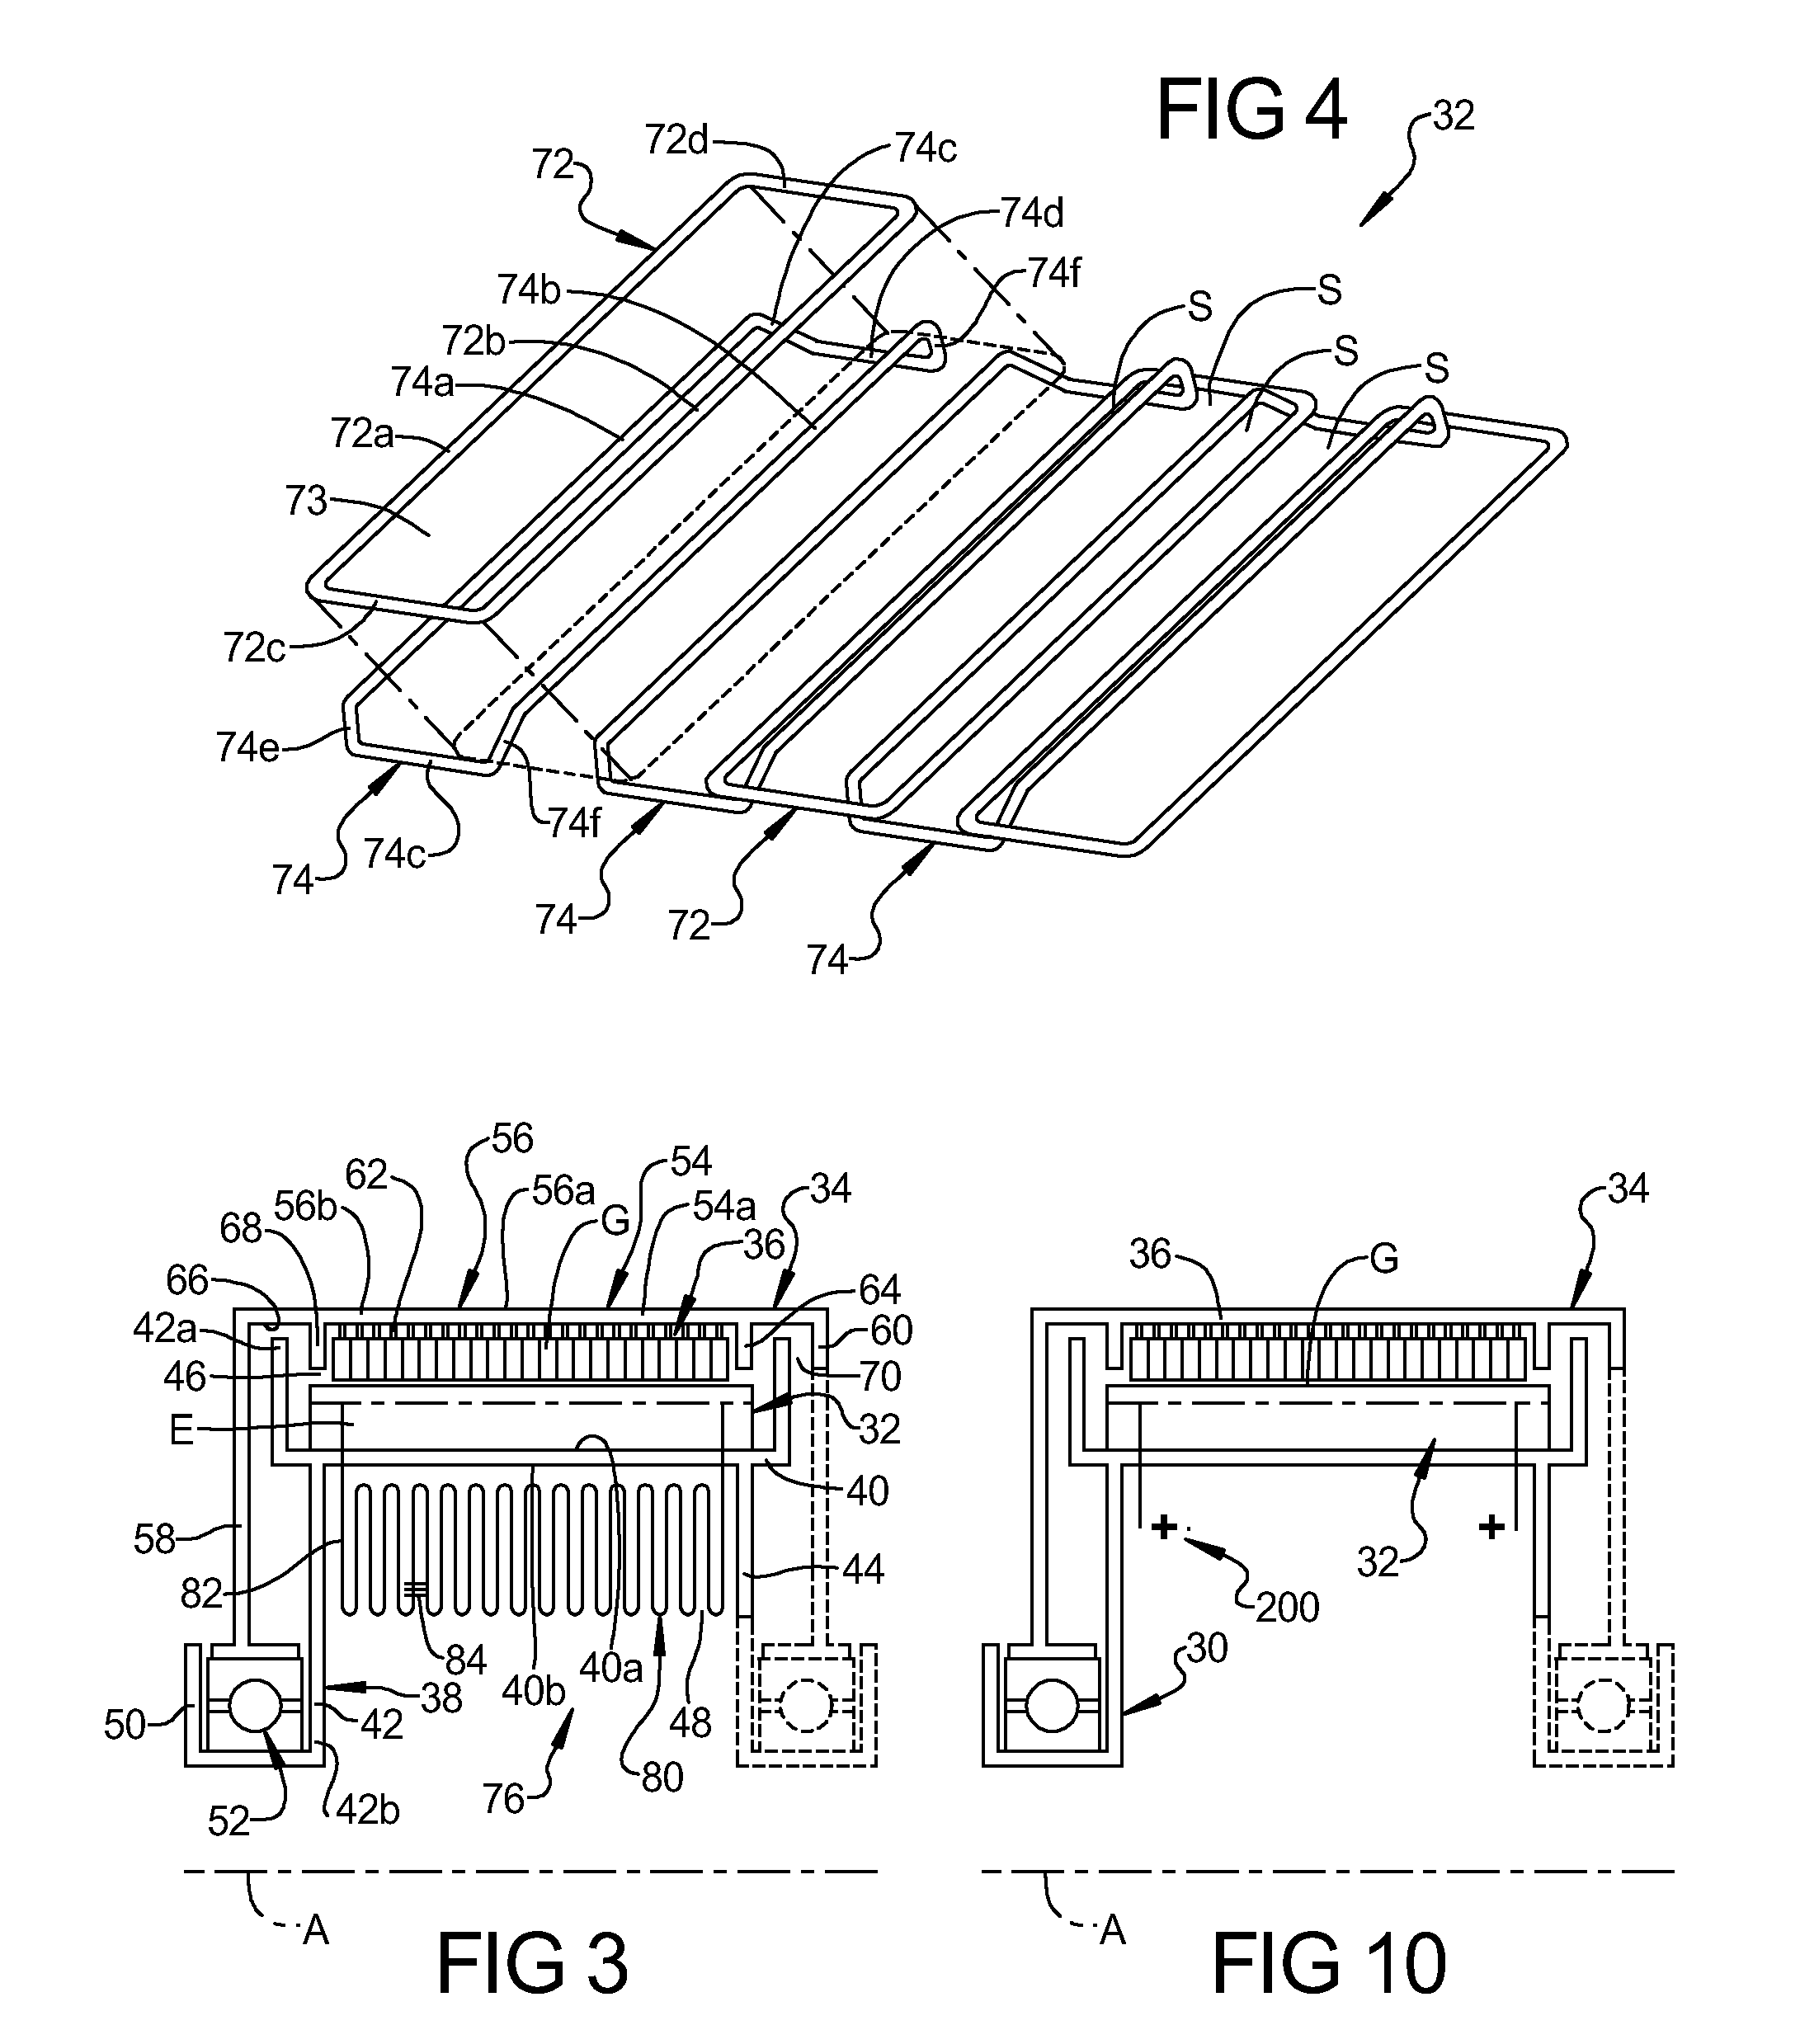 Motor/generator structure